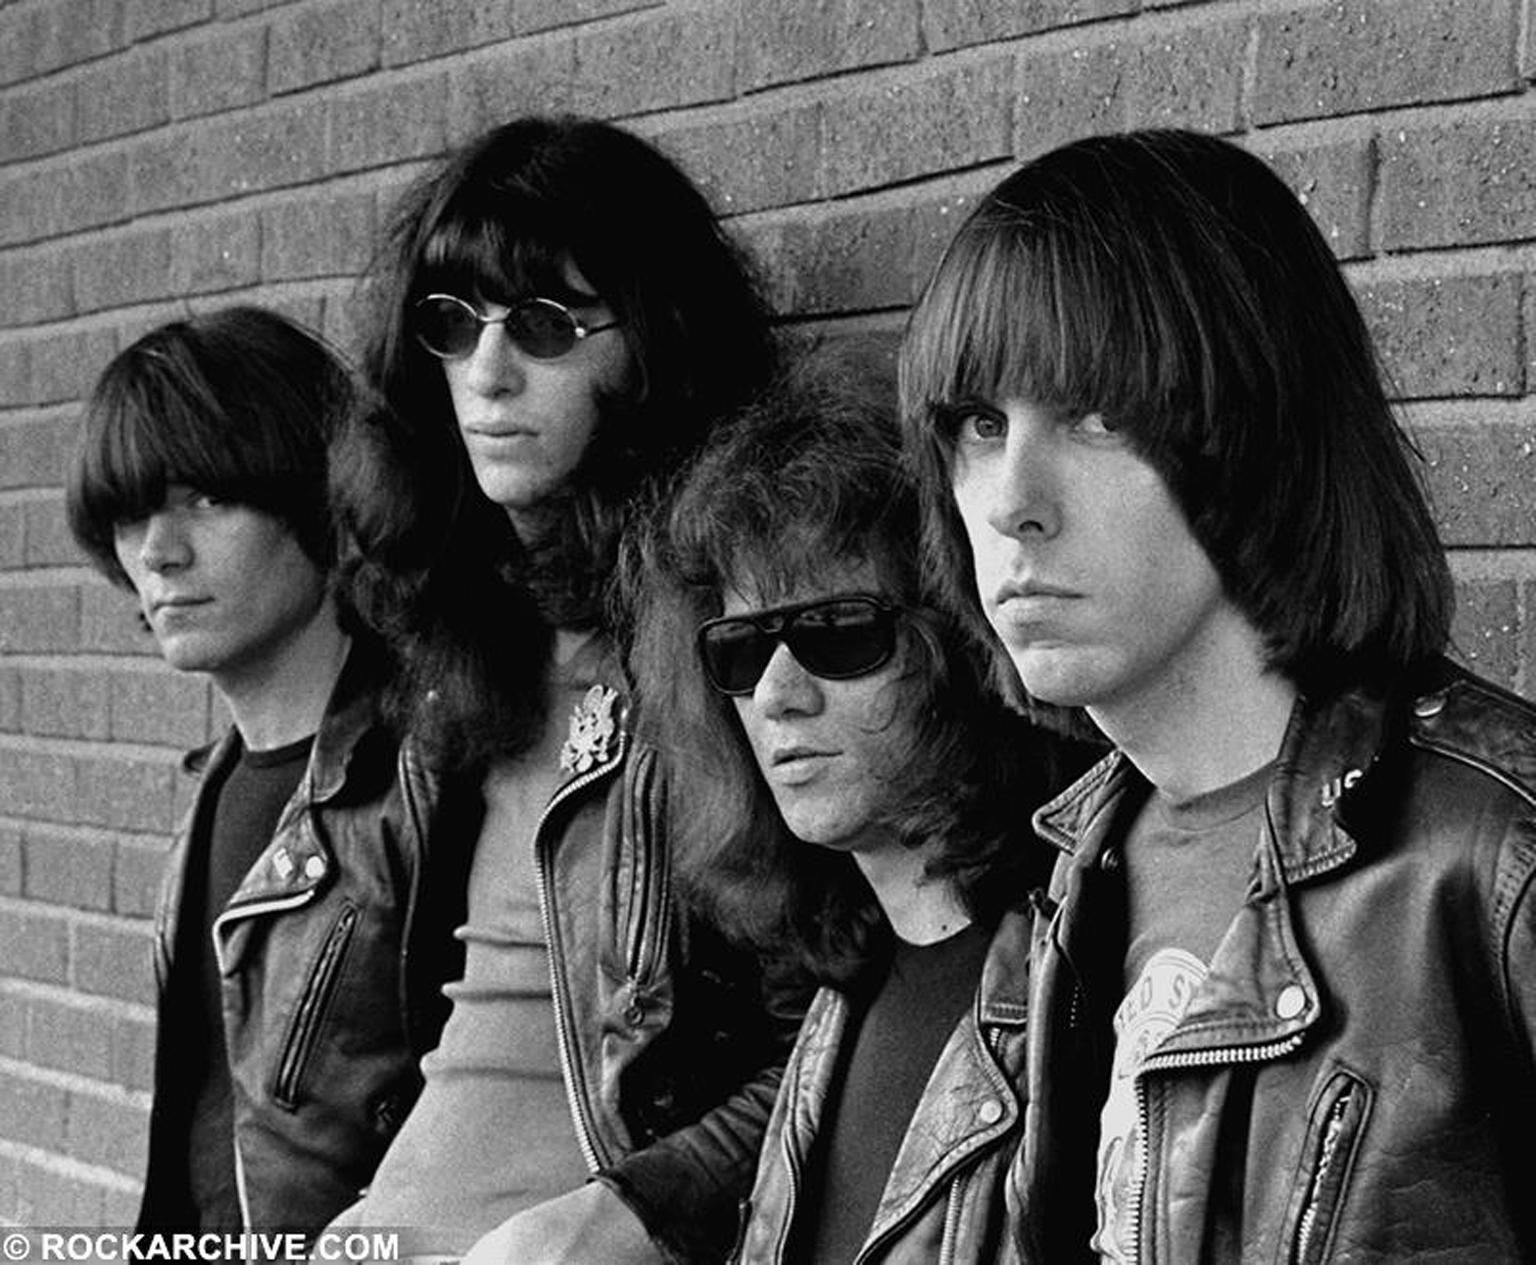 Unknown Portrait Photograph - The Ramones photographed by Stefan Wallgren 